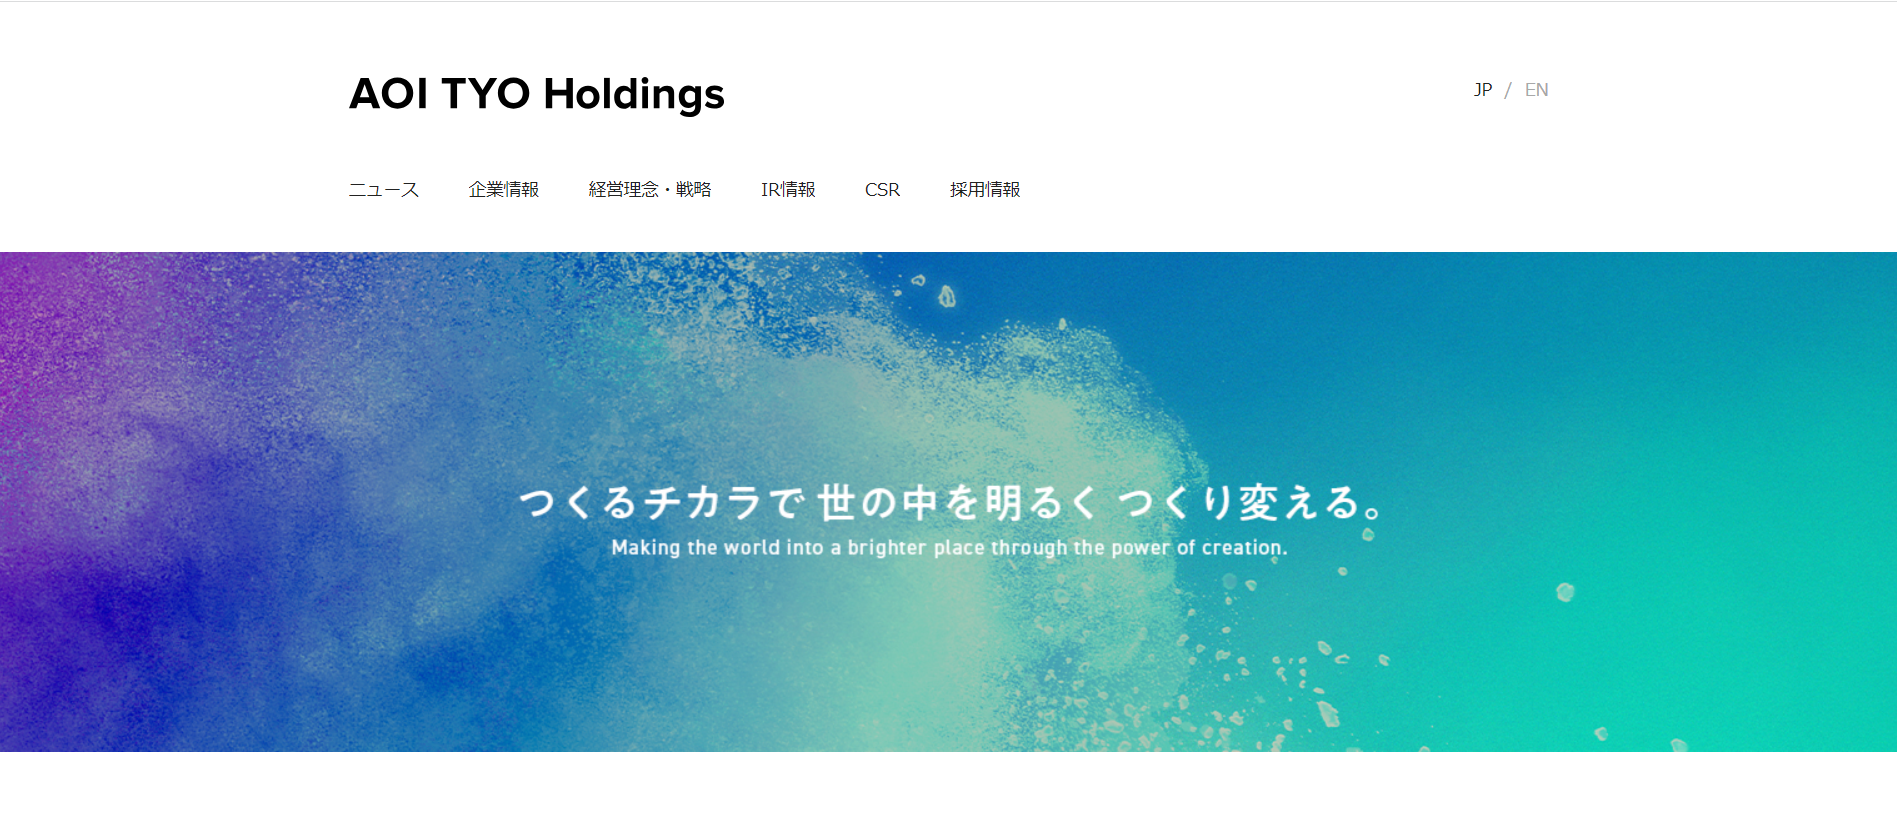 AOI TYO Holdings株式会社の電話受付代行